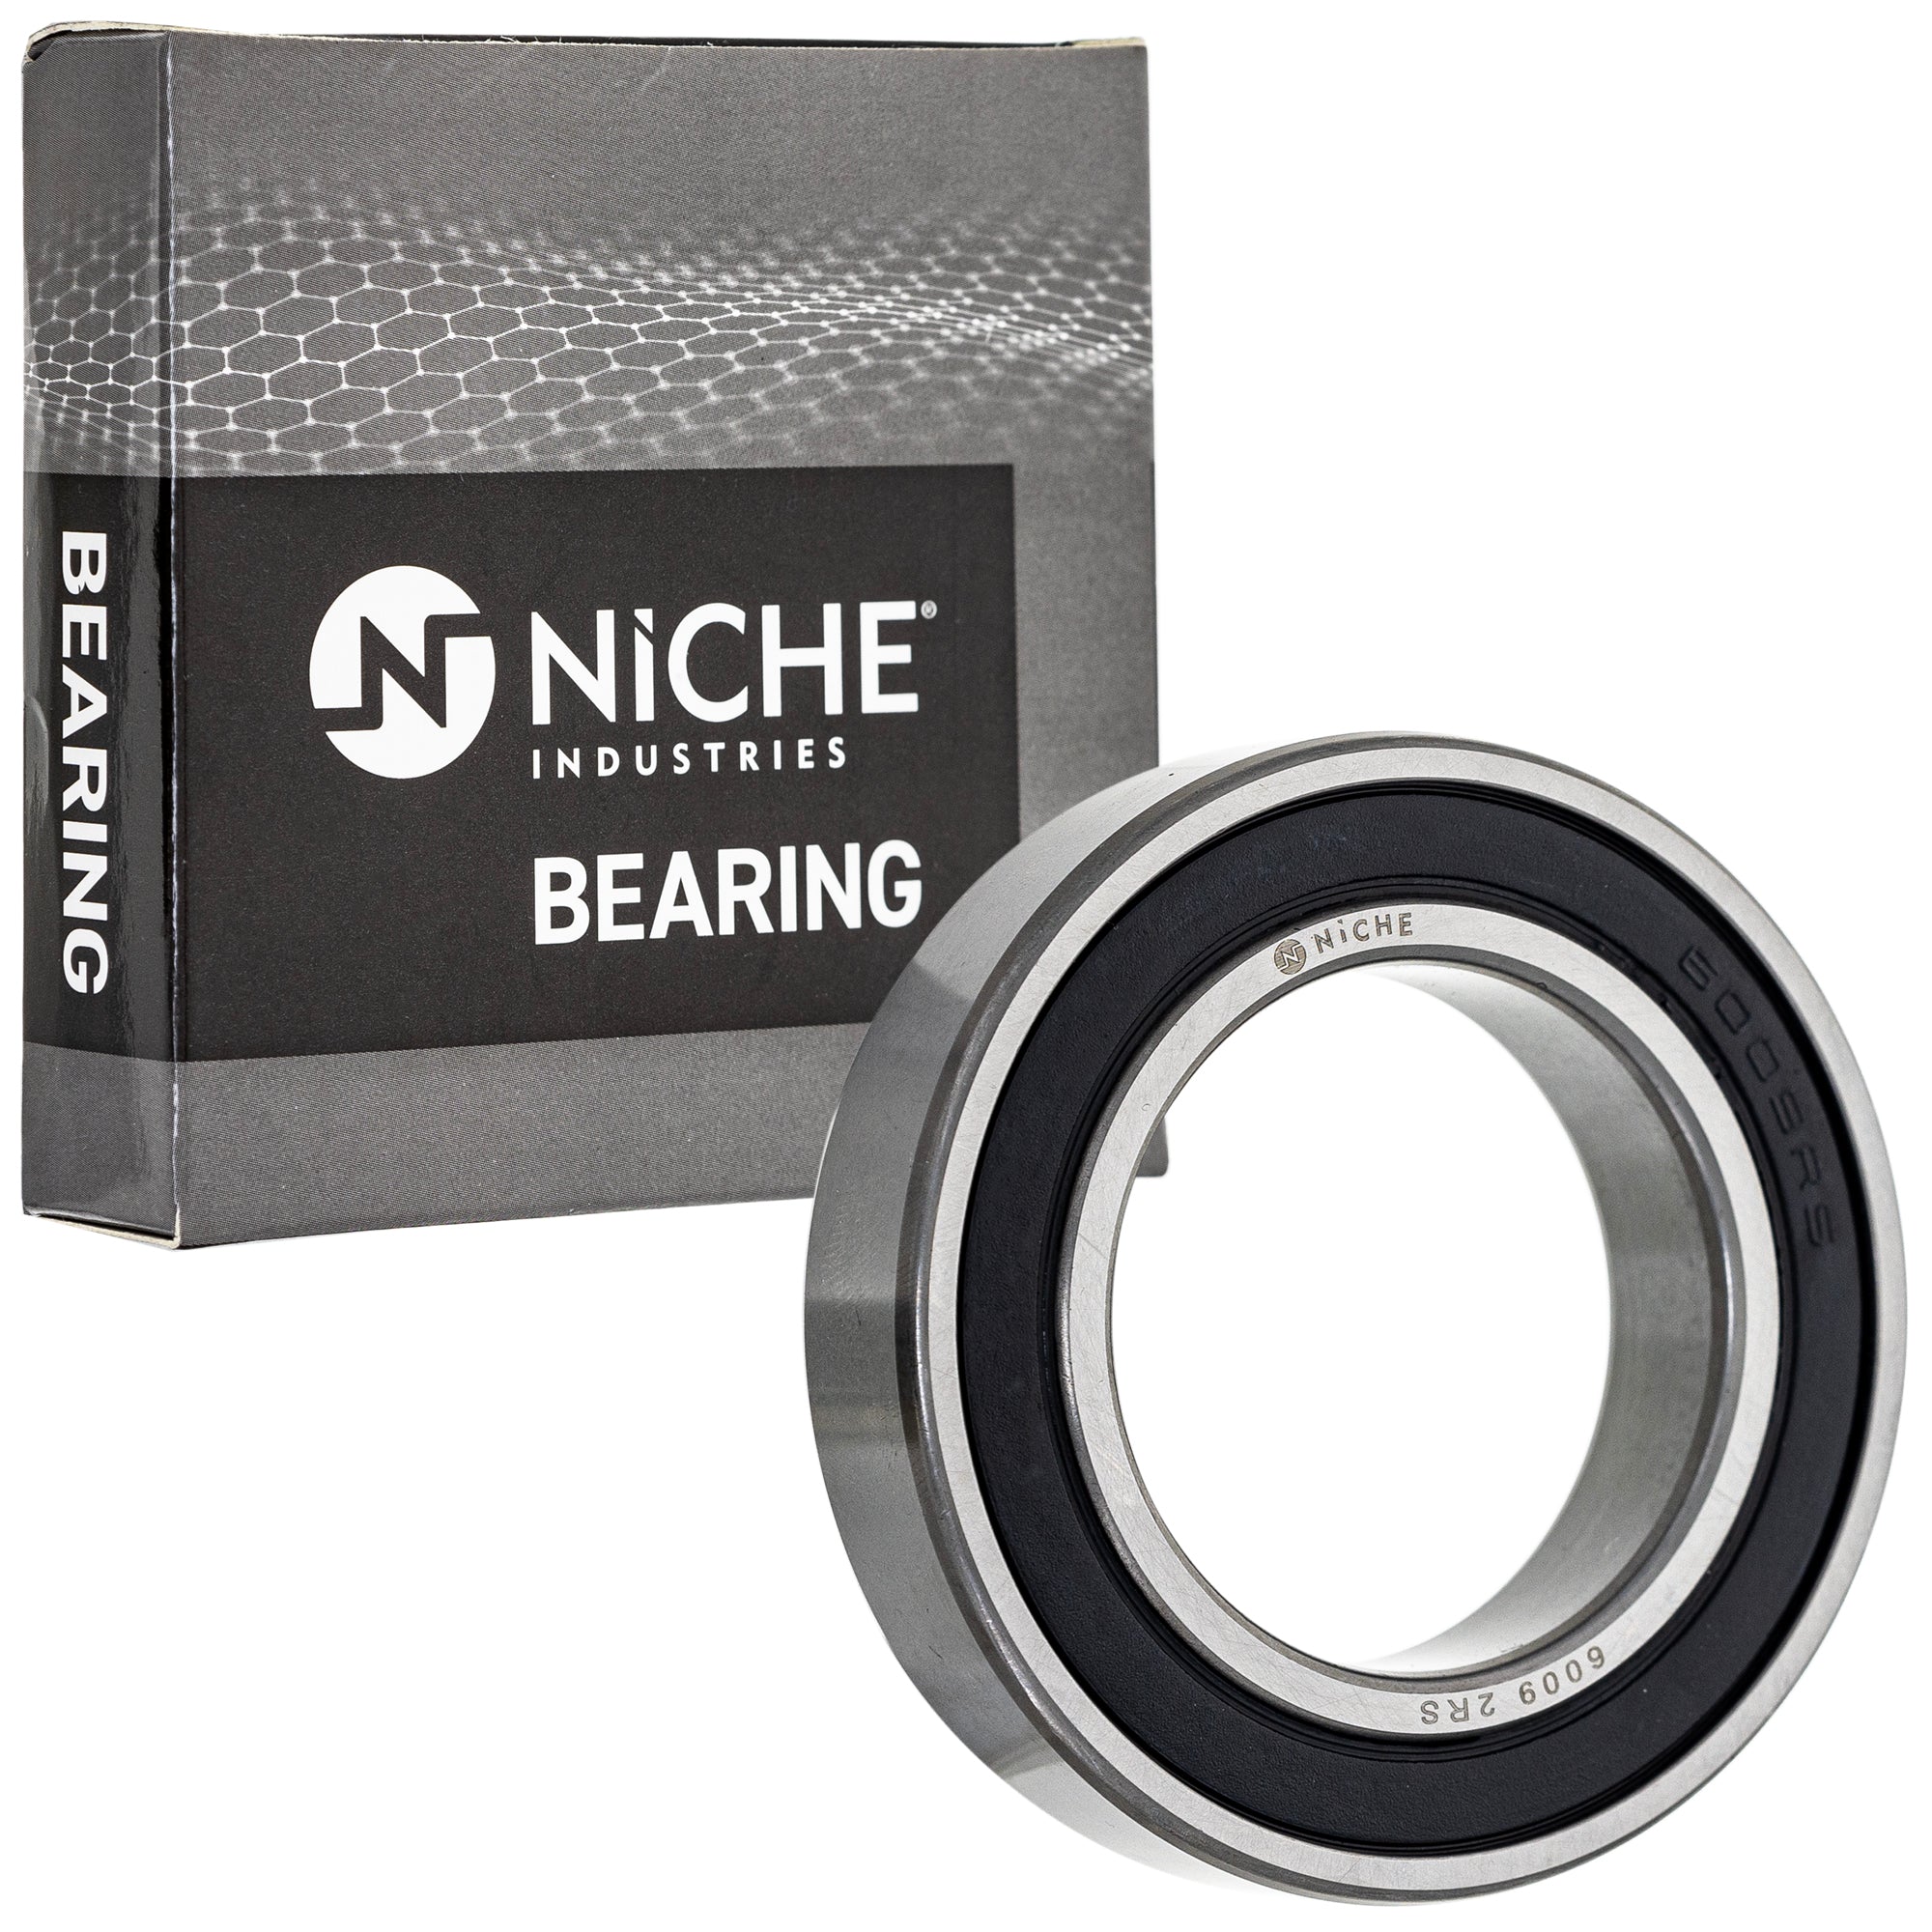 NICHE 519-CBB2269R Bearing 2-Pack for zOTHER TRX450 TRX400 TRX300